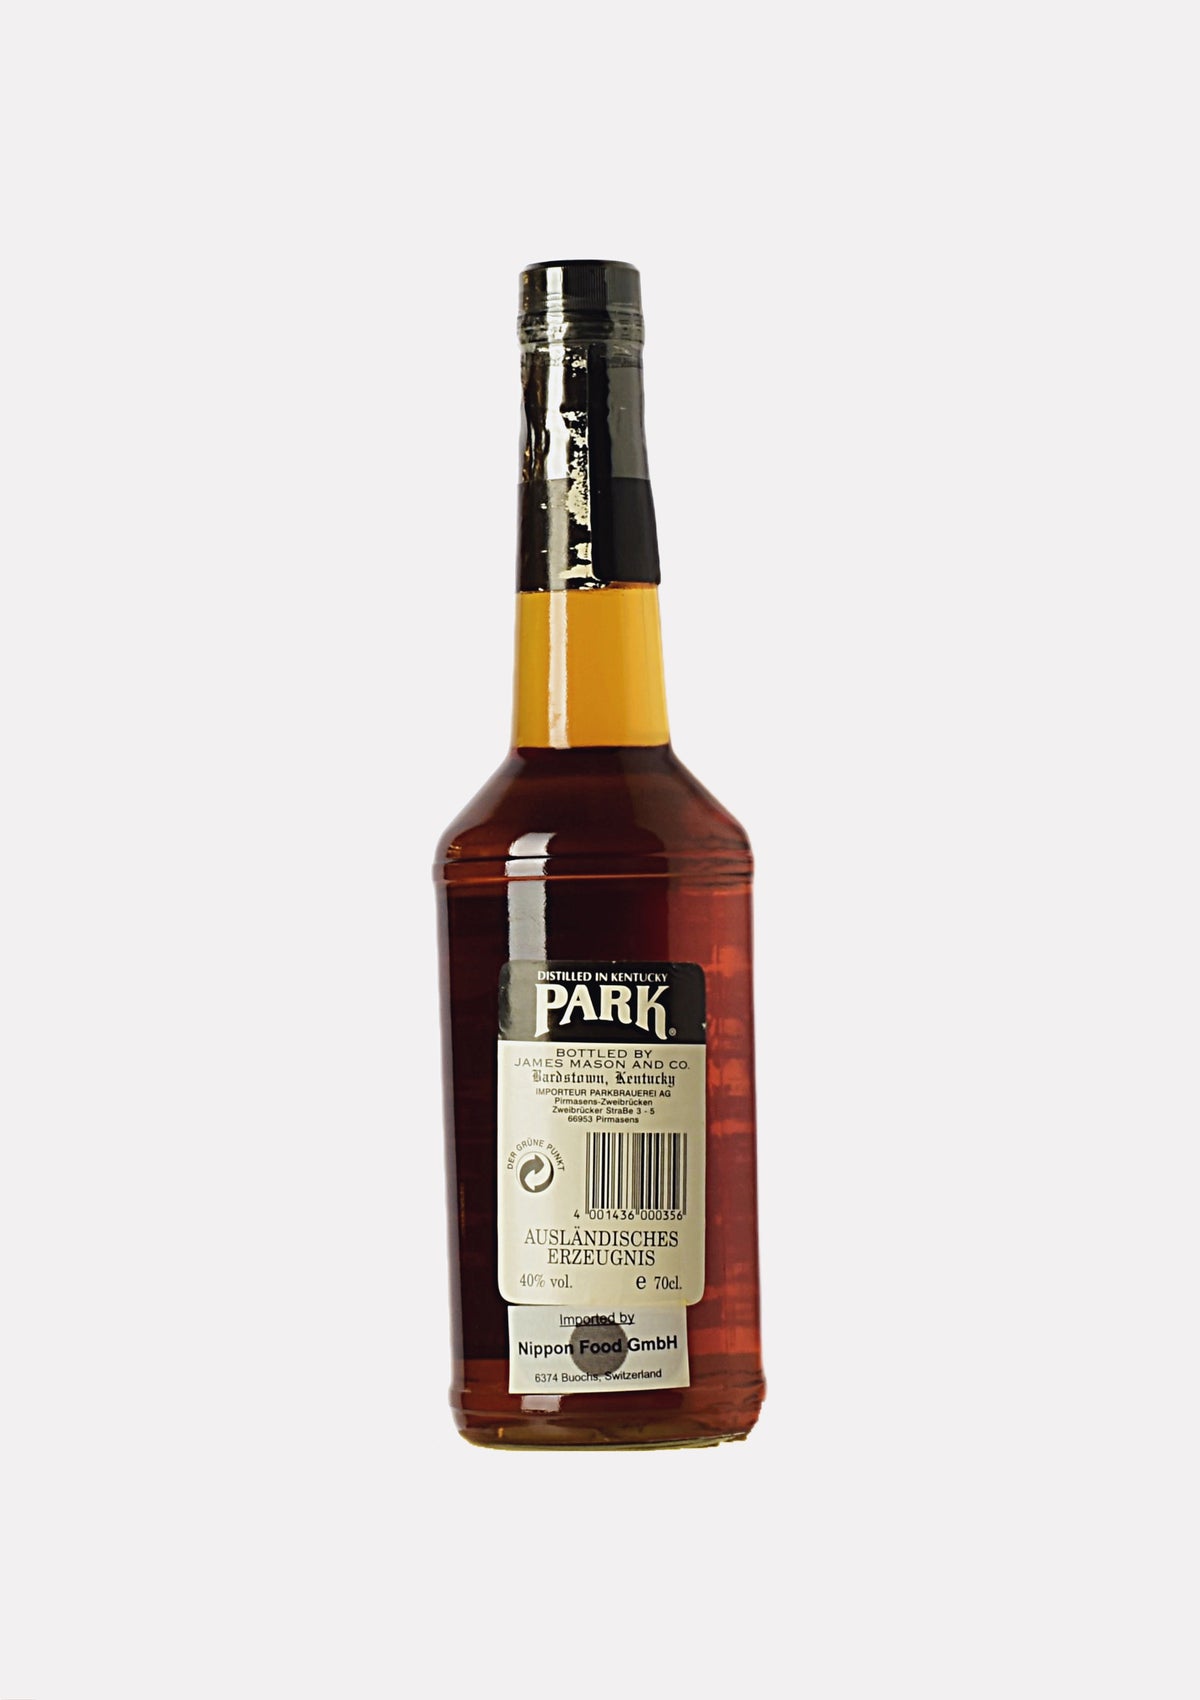 Park Kentucky Straight Bourbon Whiskey